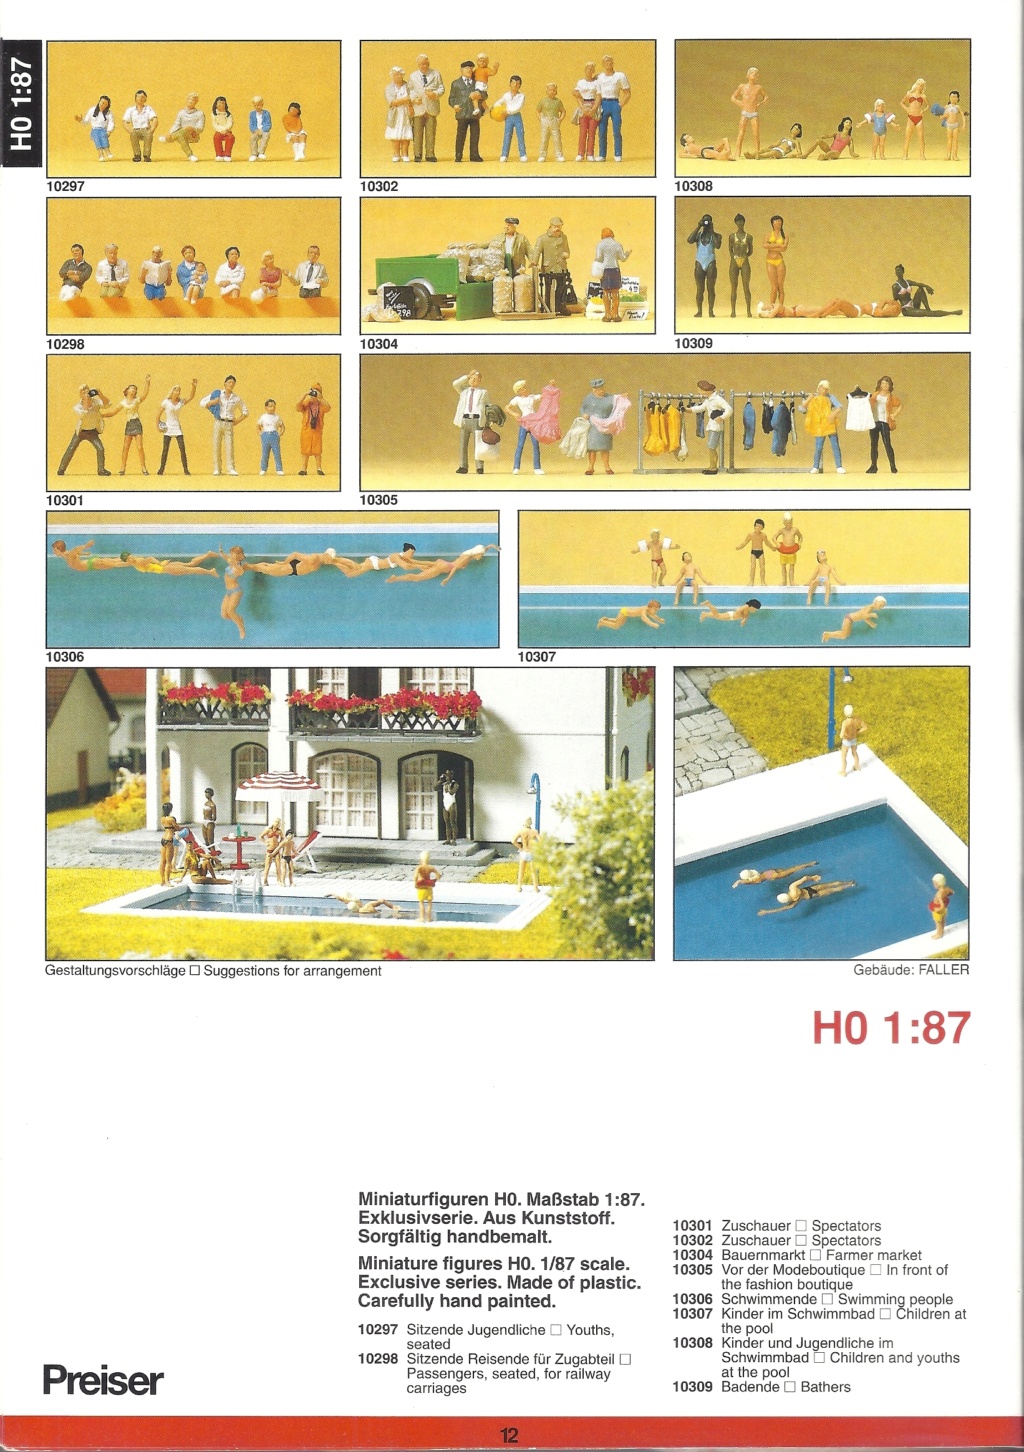 preiser - [PREISER 1996] Catalogue K22 1996 Preis903